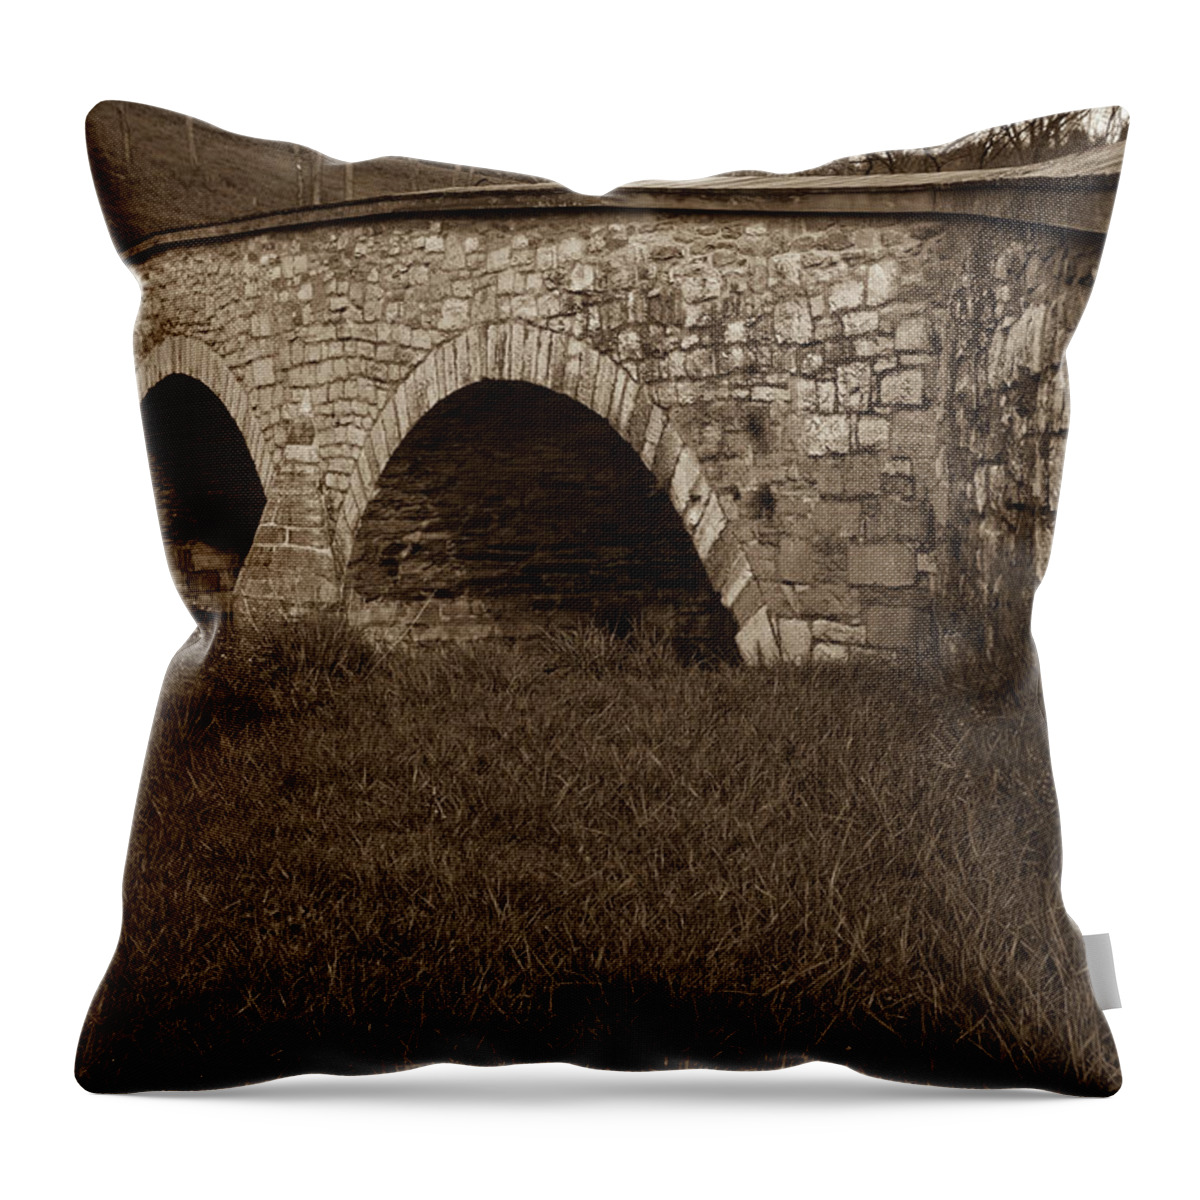 Anbp Throw Pillow featuring the photograph Burnside Bridge by James Oppenheim